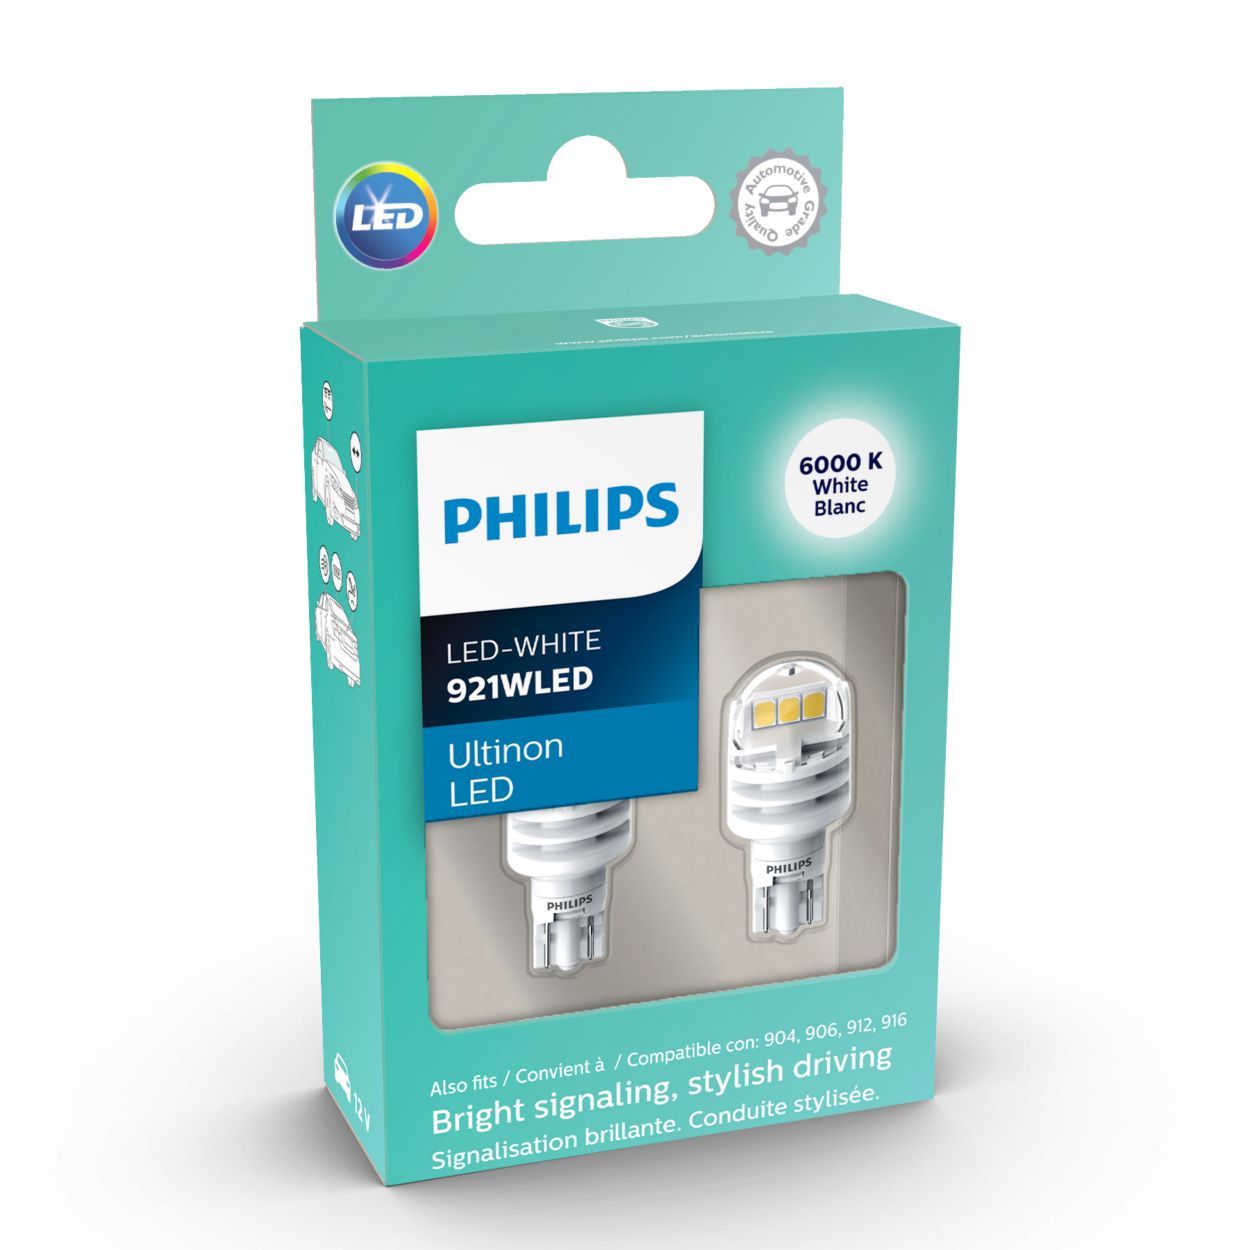 Ultinon LED Car signaling bulb 921ULWX2 Philips